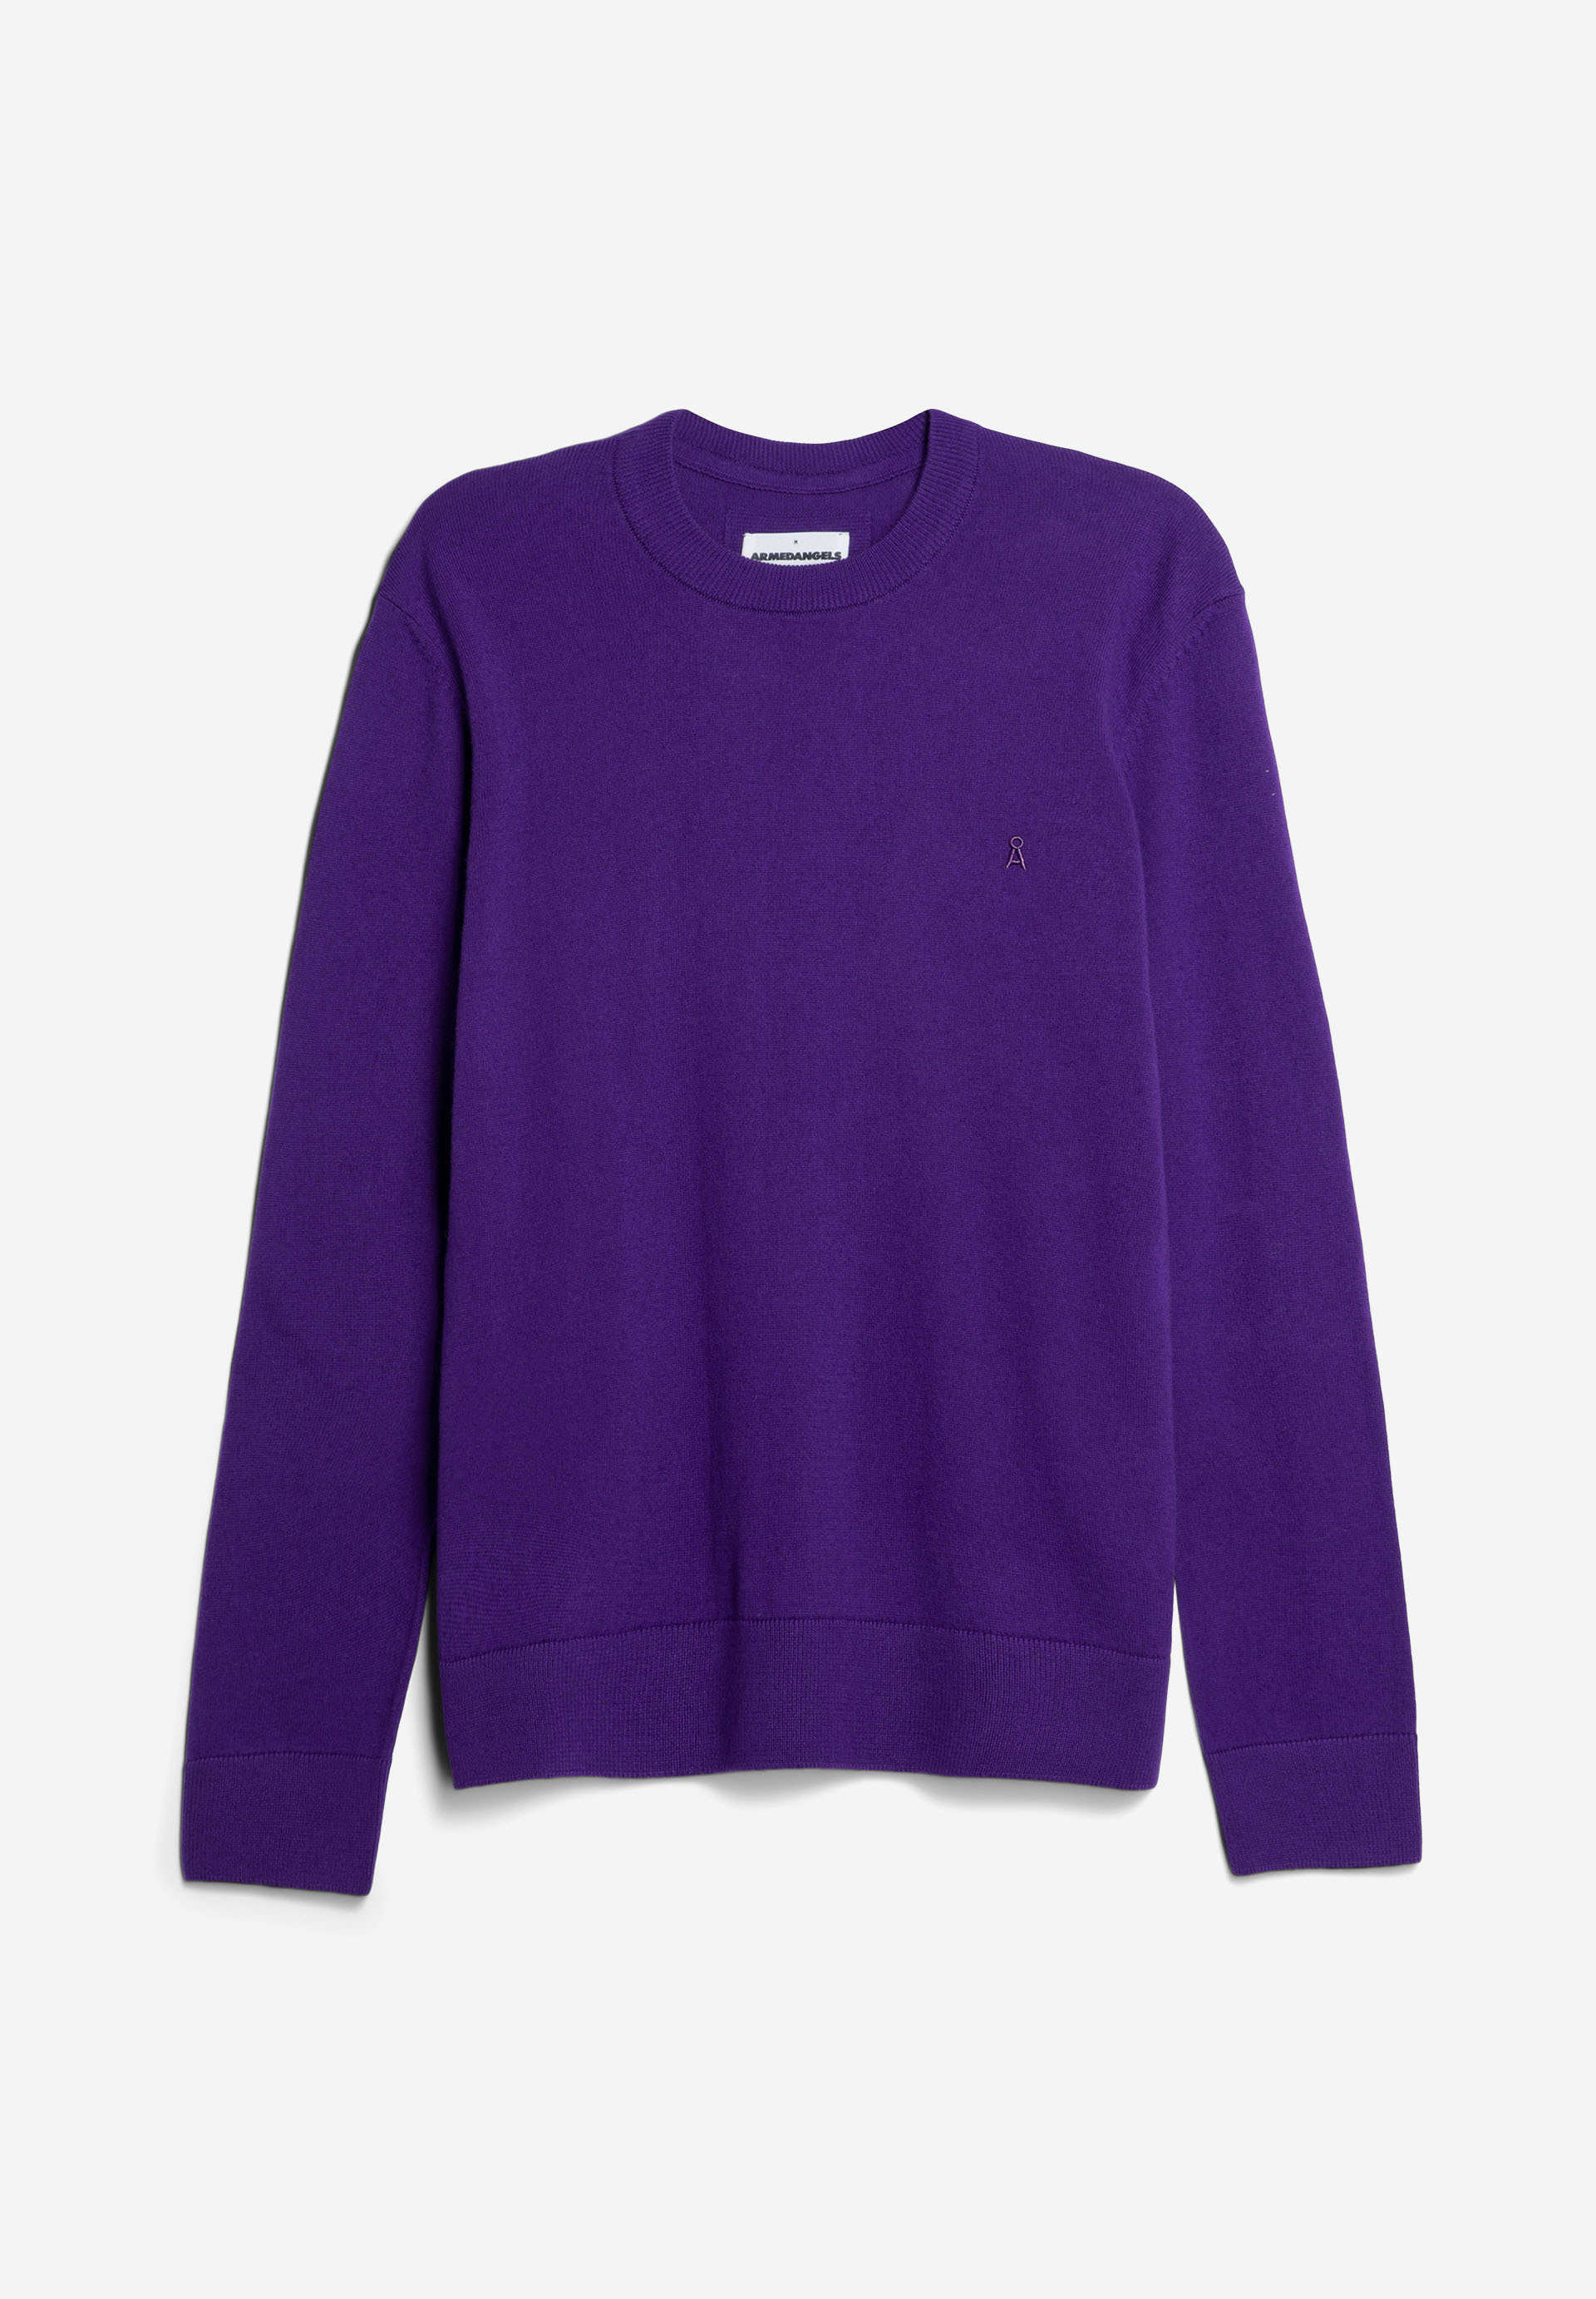 MAARINOS Sweater Regular Fit made of Merino-Wool Mix